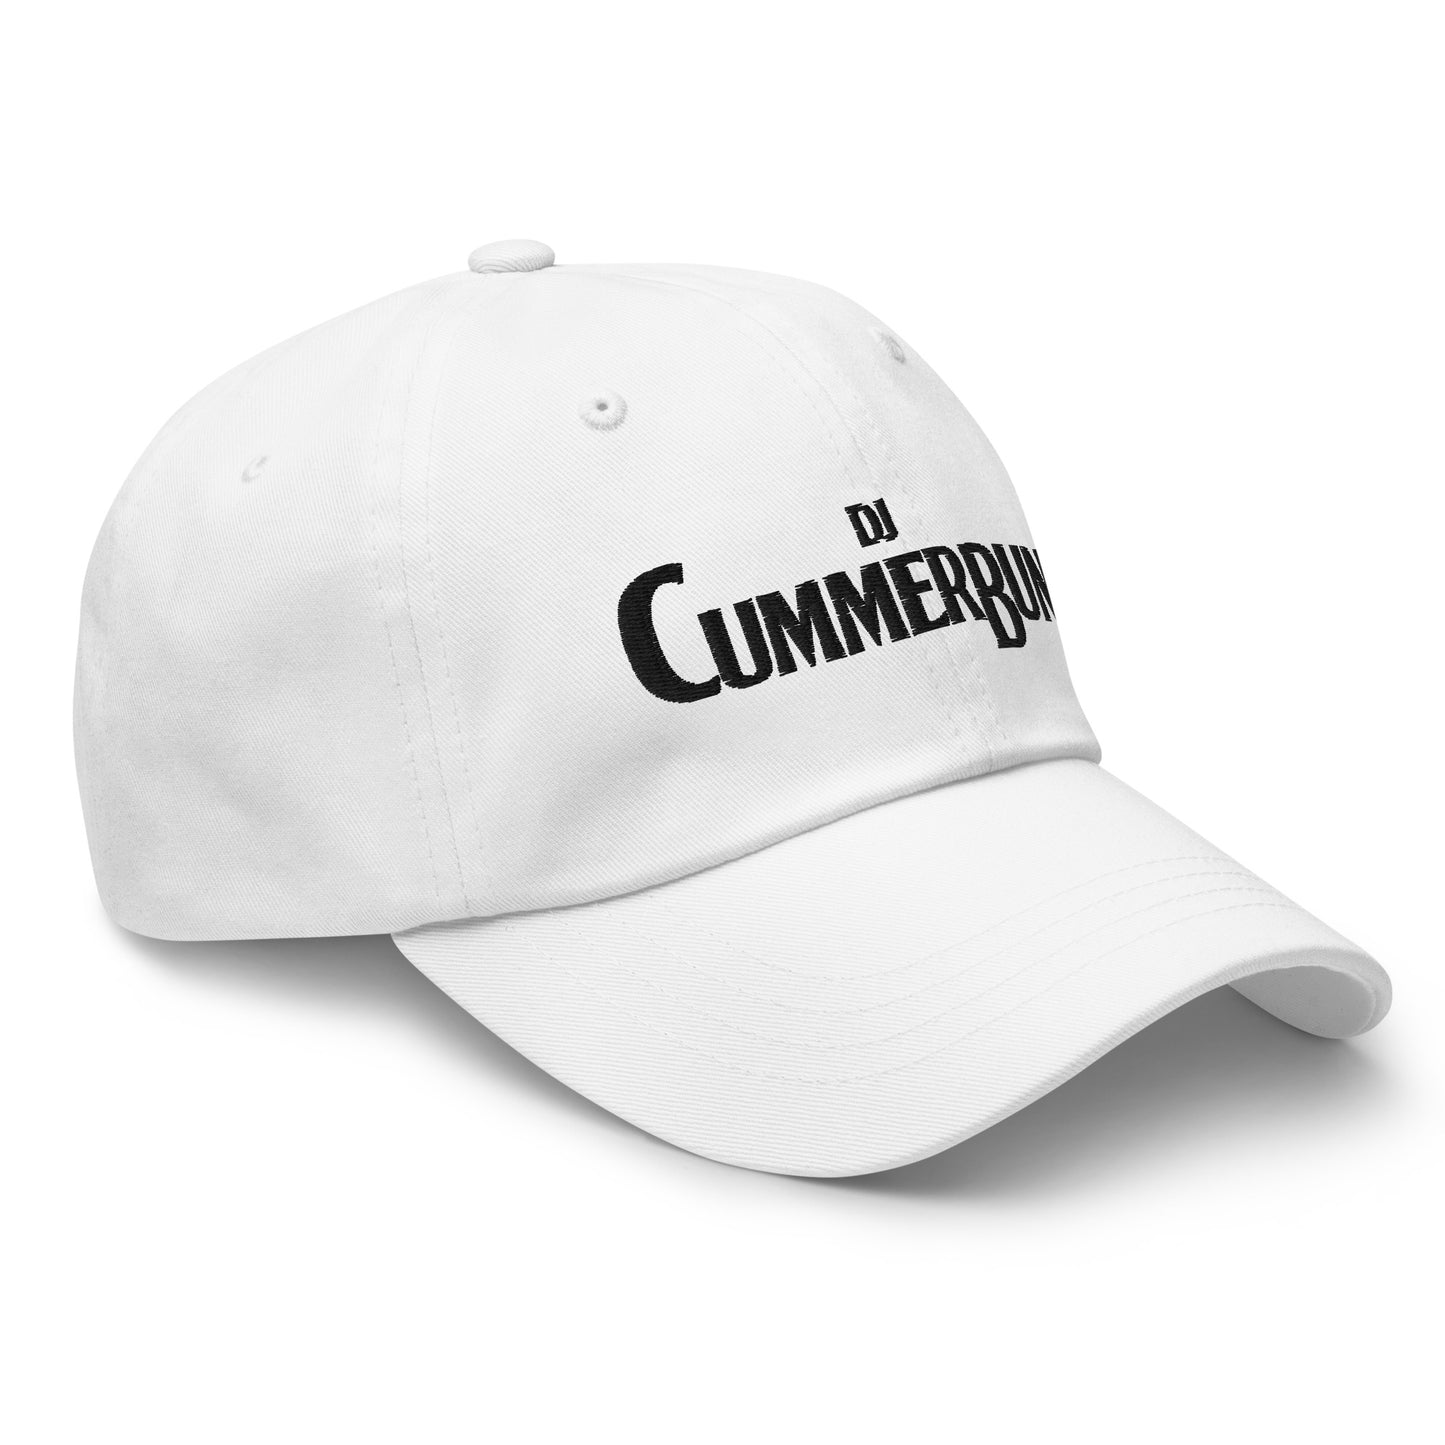 All You Need Is Cummerbund Light Hat